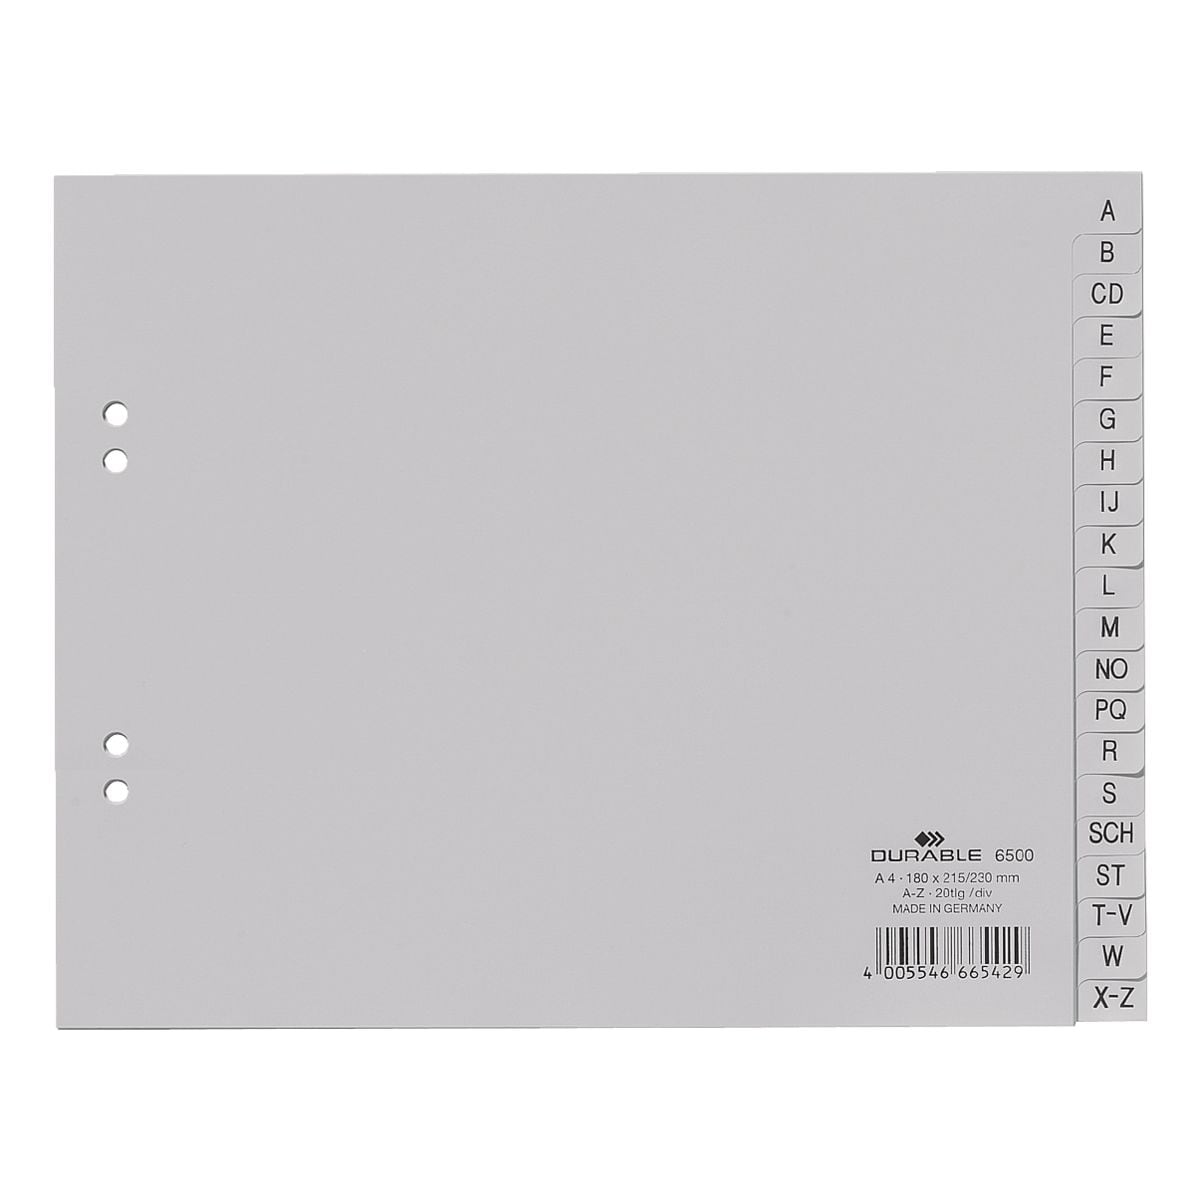 Durable tabbladen, A4 halve hoogte, A-Z 20-delig, grijs, kunststof